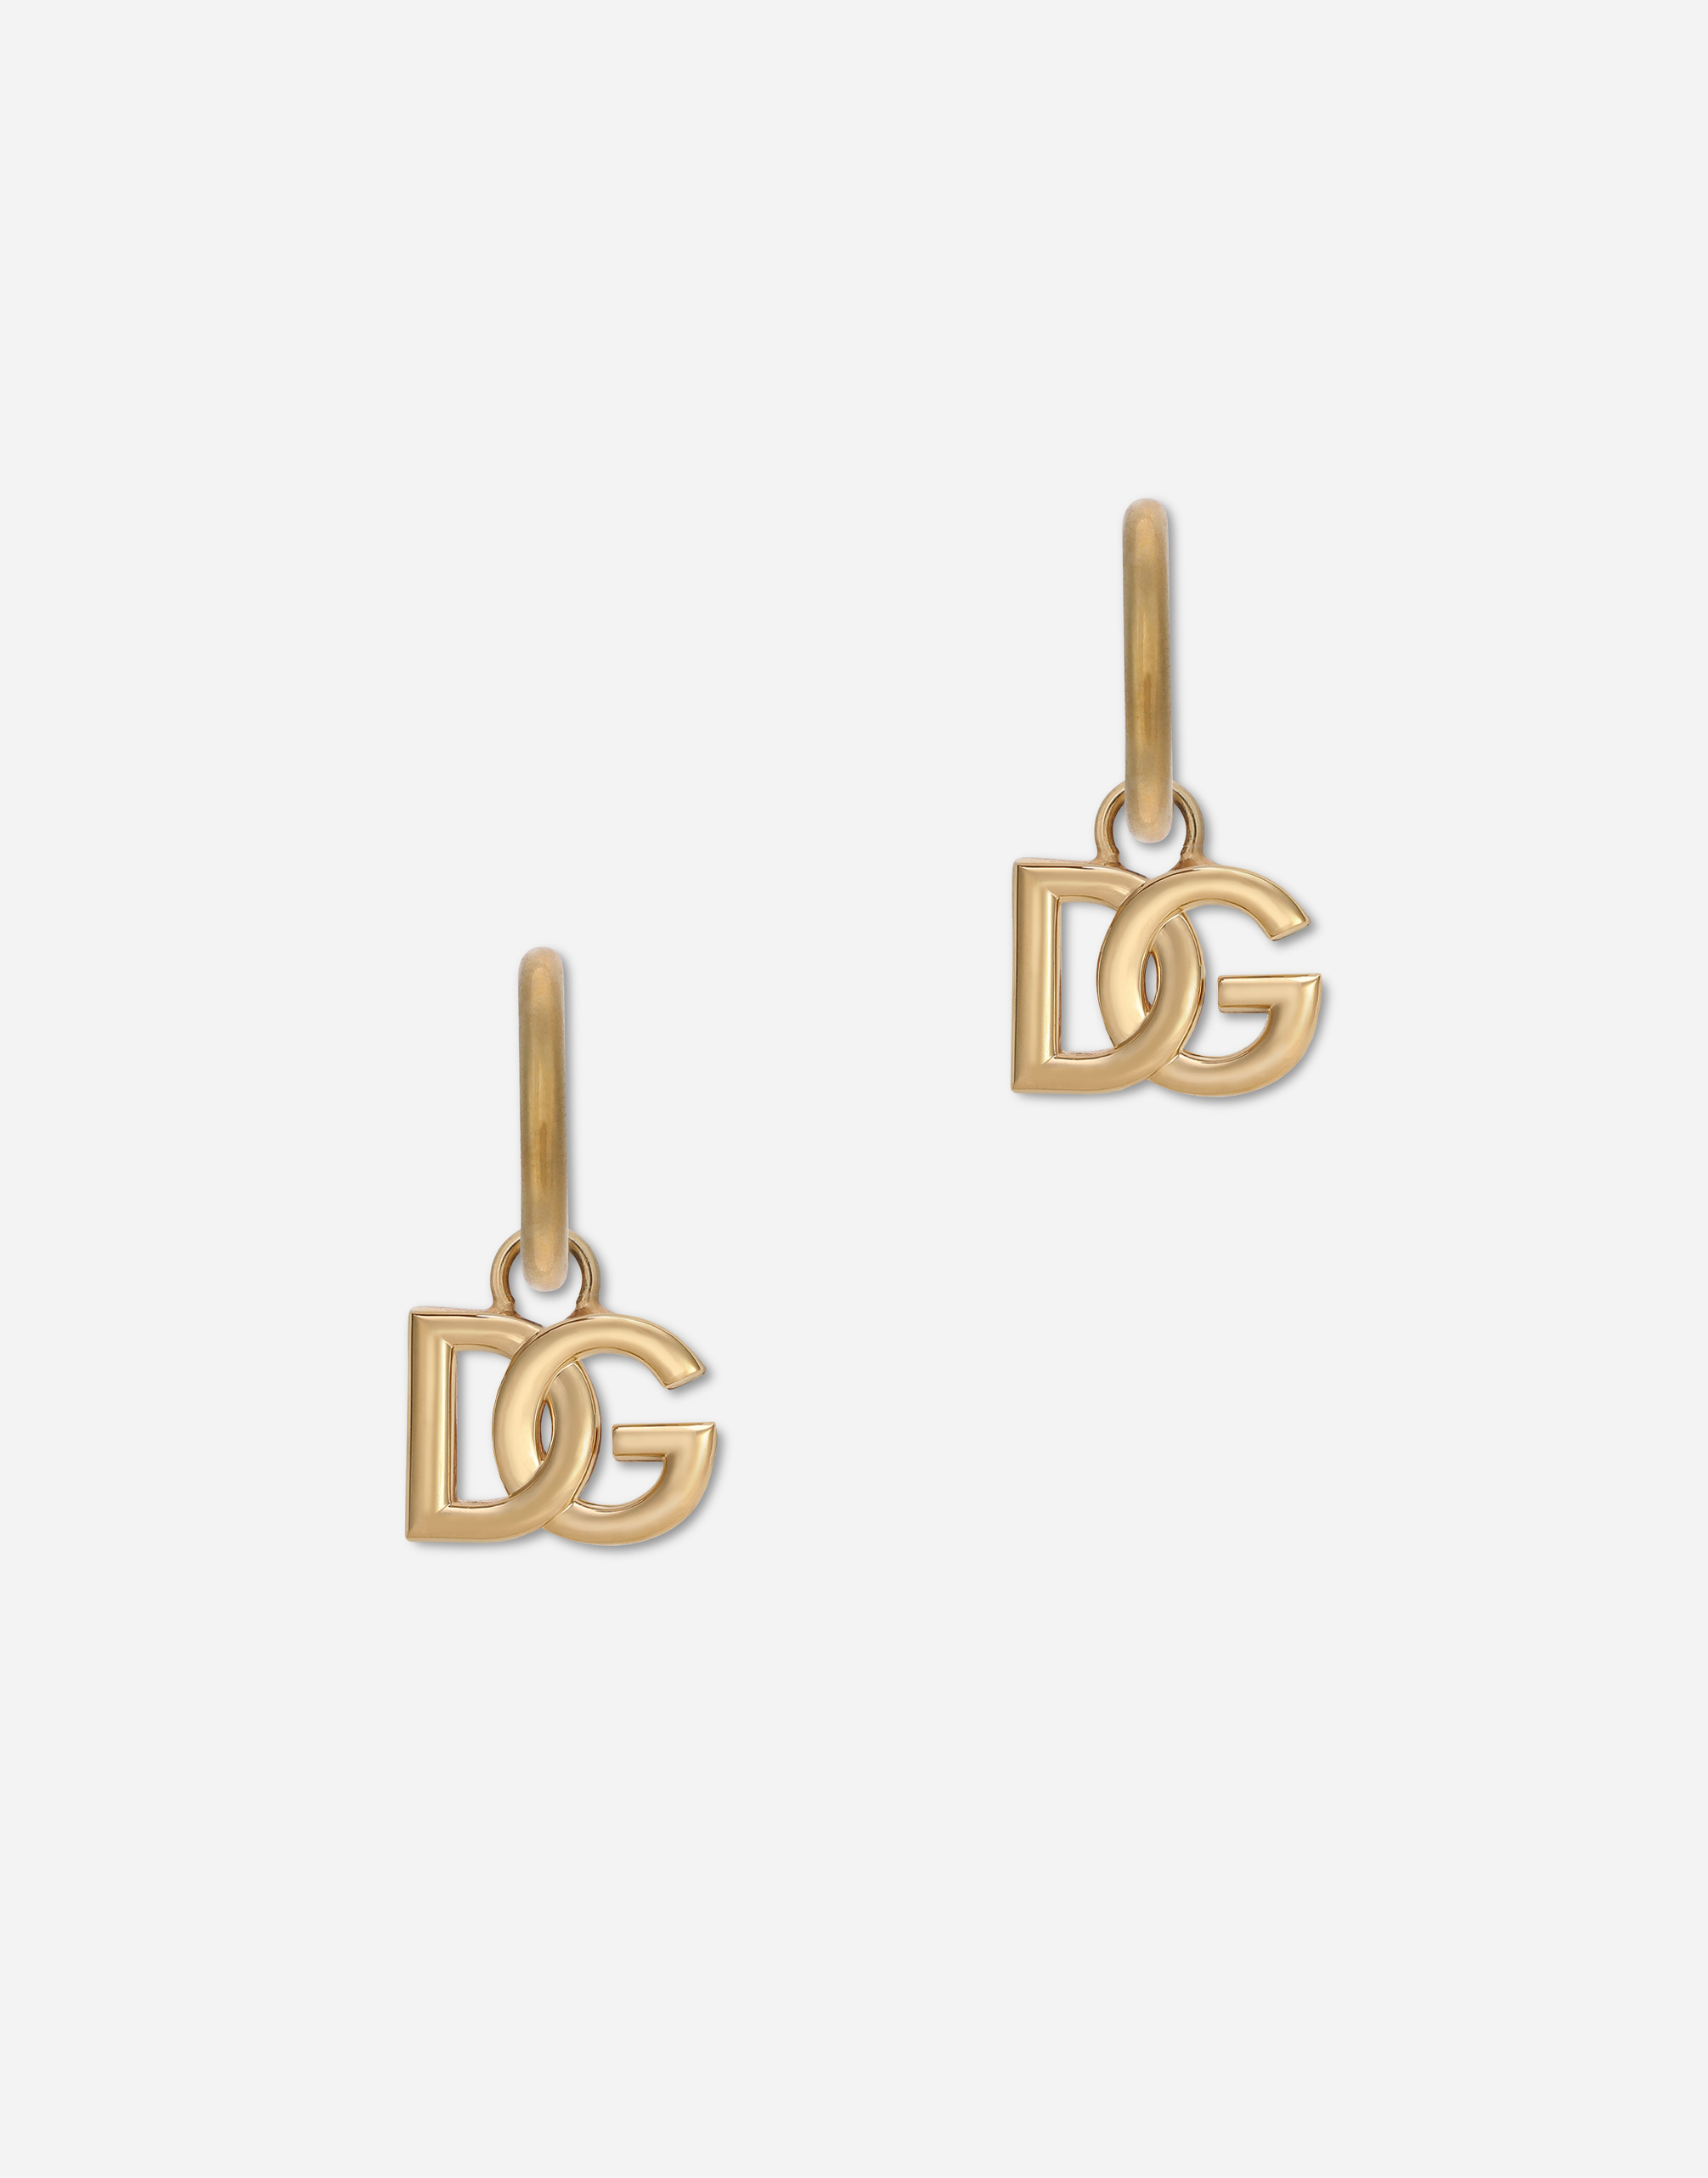 Hoop earrings with DG logo pendants in Gold